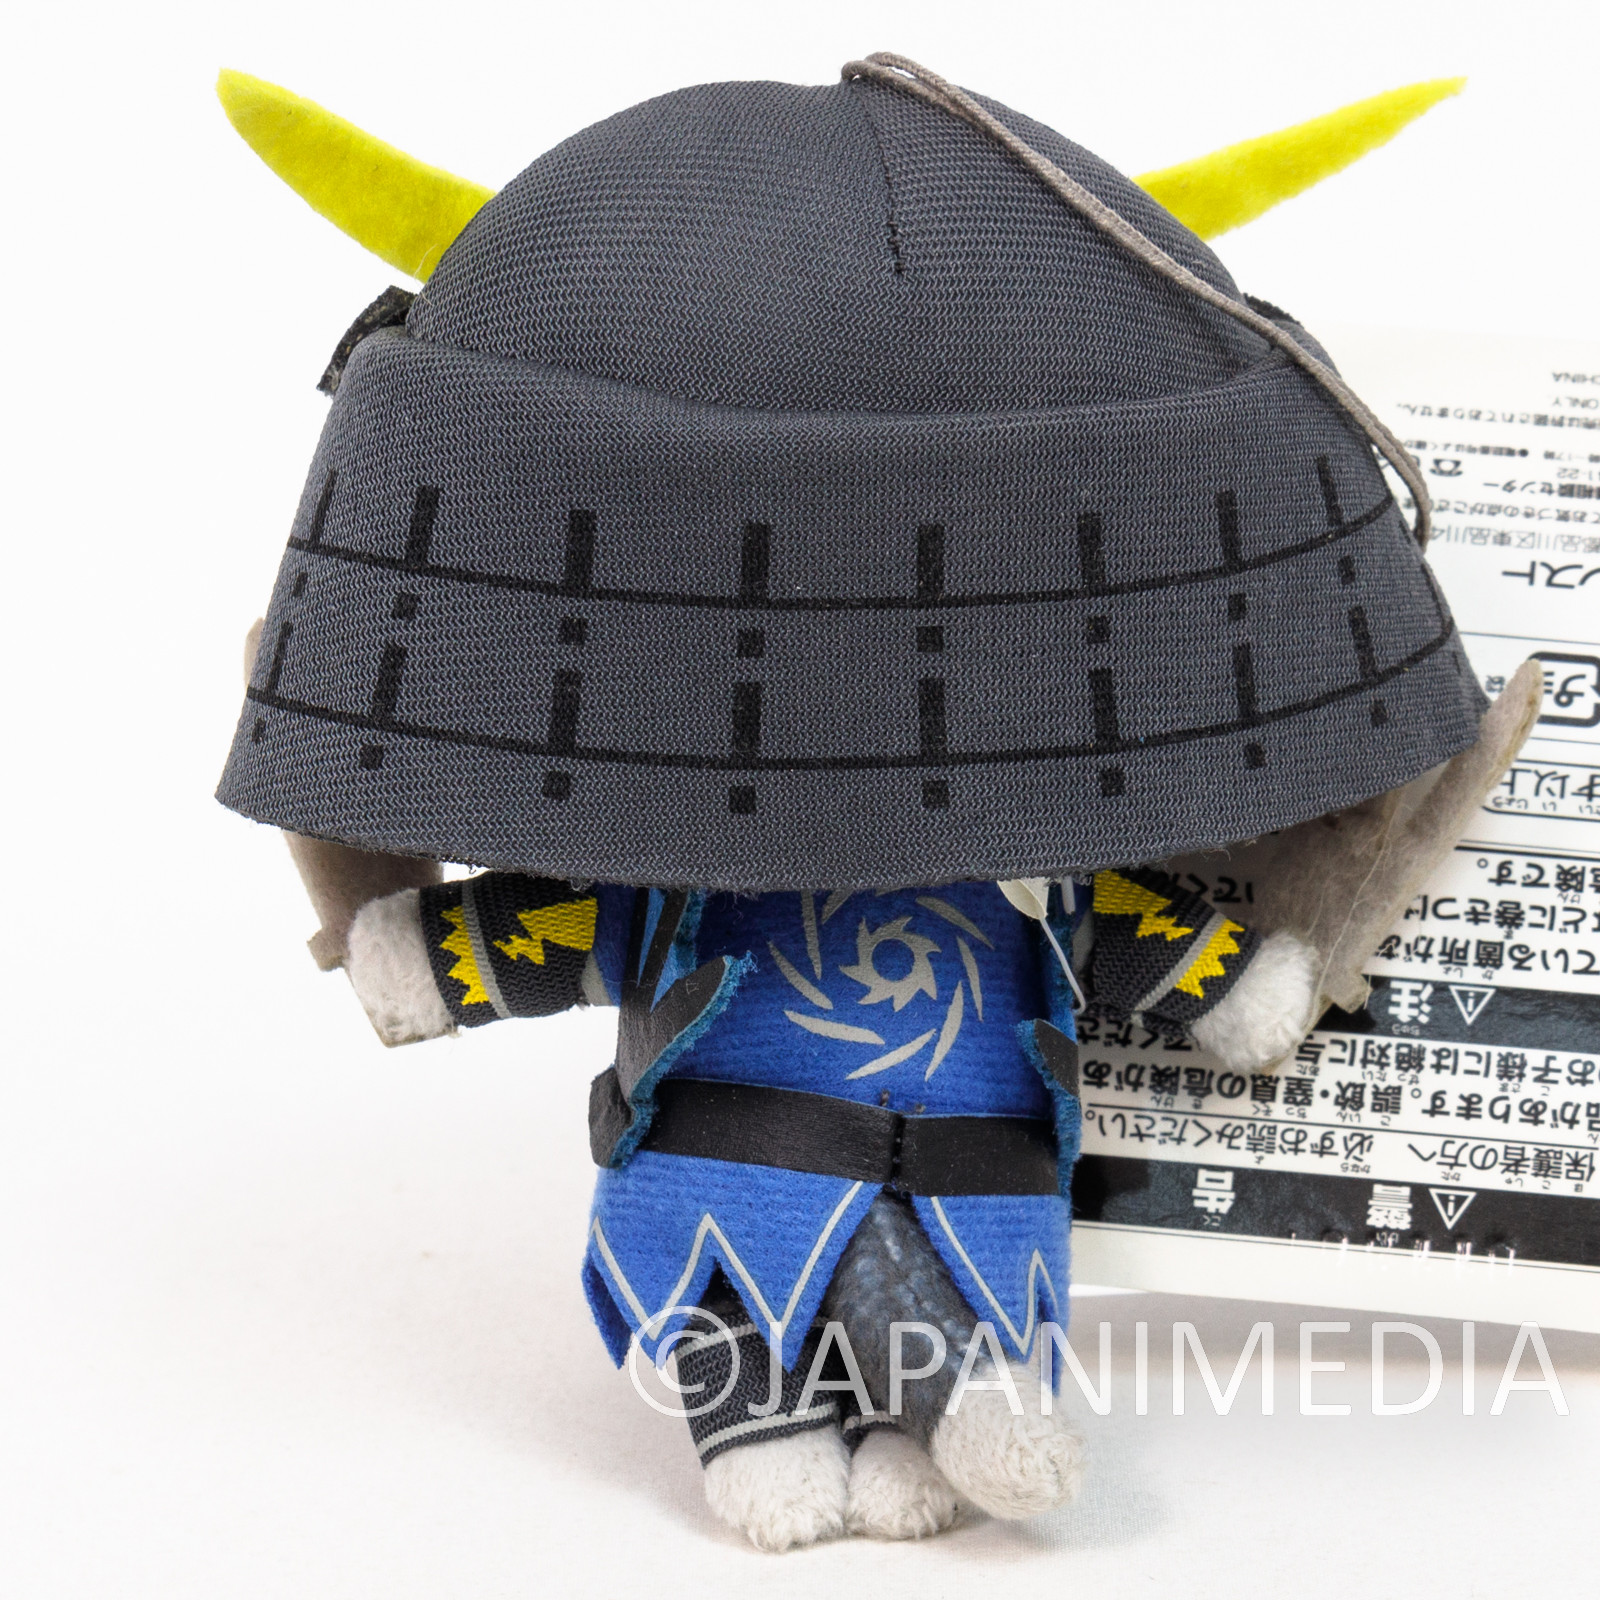 Sengoku Basara Masamune Date x Monster Hunter Melynx Merarou Plush Doll Capcom